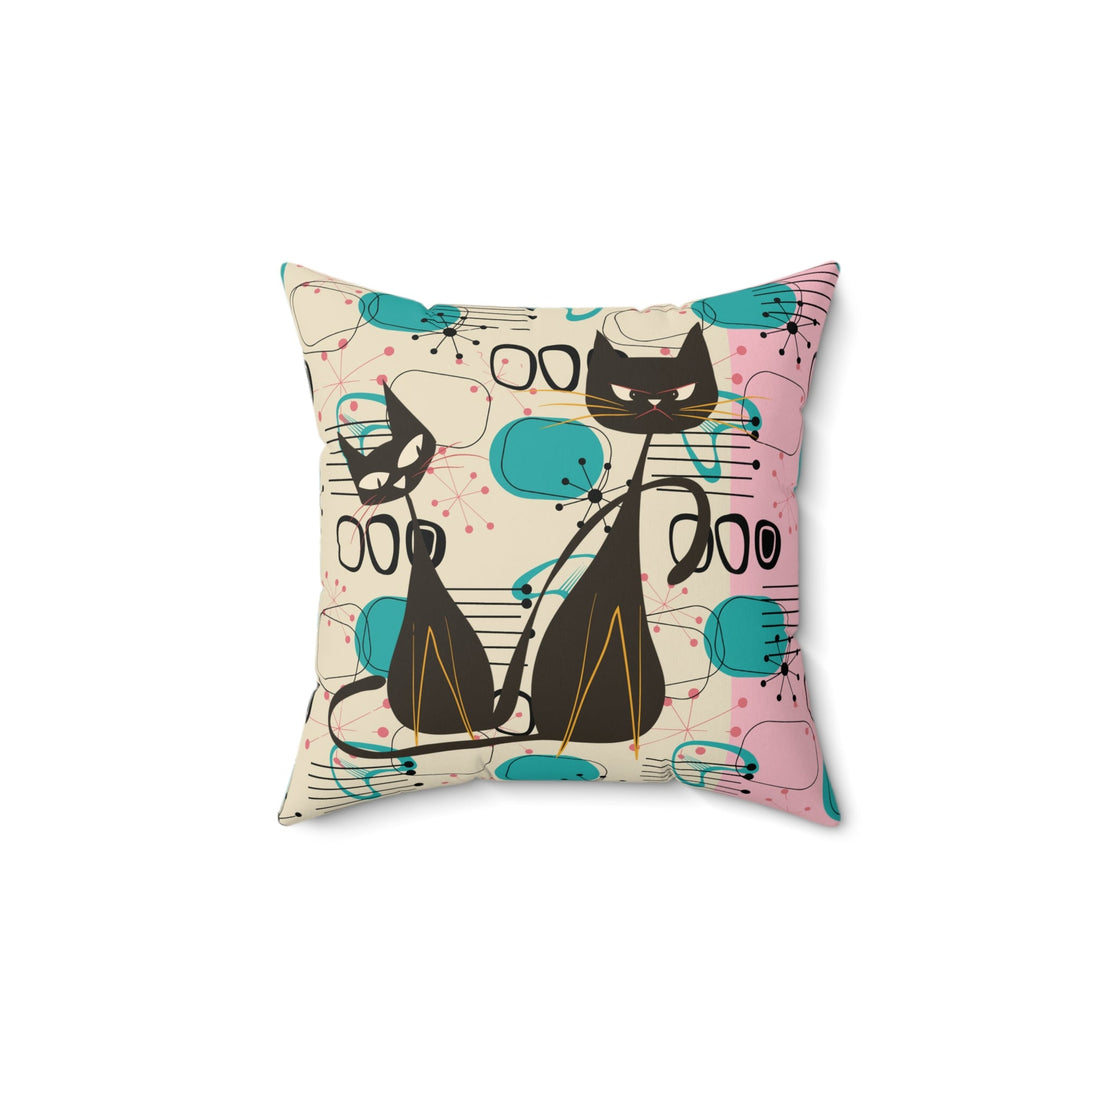 Kate McEnroe New York Retro Atomic Cat Mid Century Modern Throw Pillow, Geometric Pink Turquoise and Black MCM CushionThrow Pillows21750414145798727287